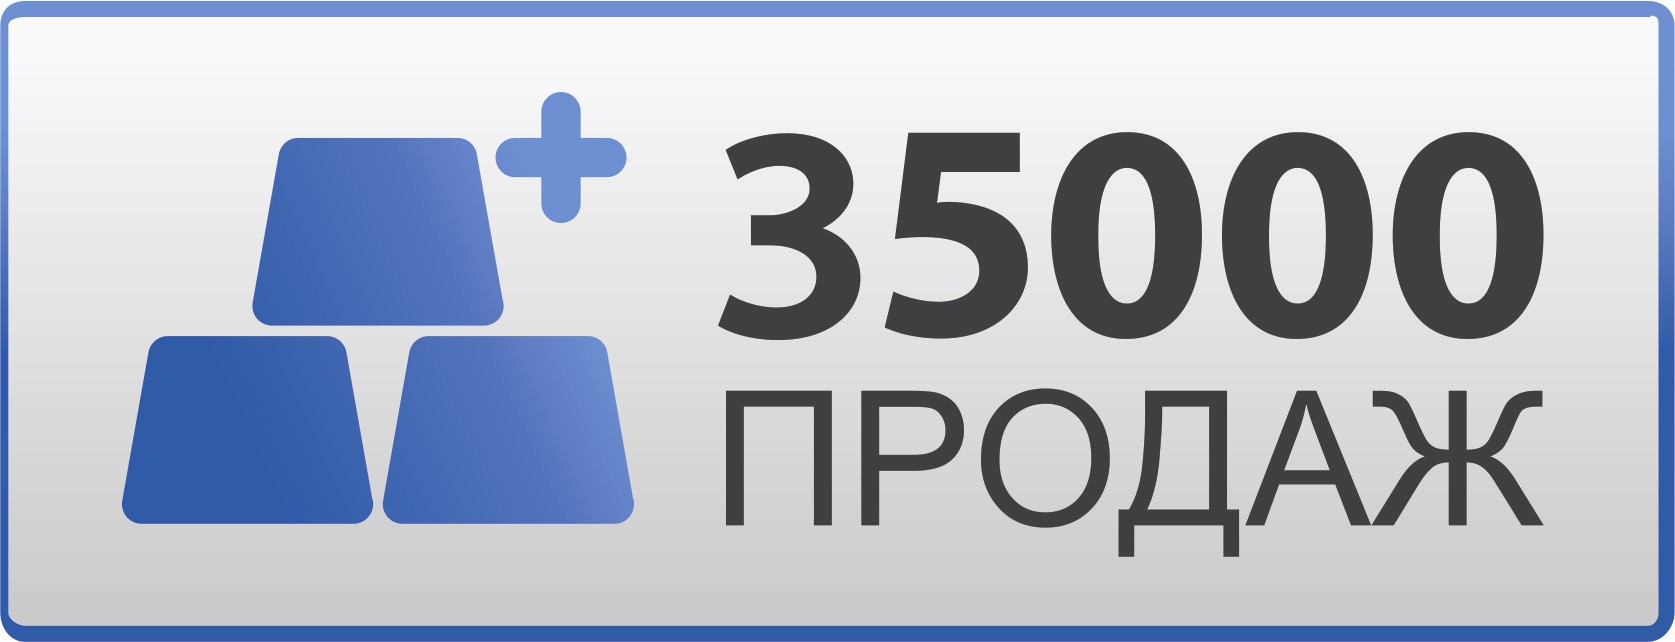 Kaspersky Internet Security на 1 устройства на 1 год.